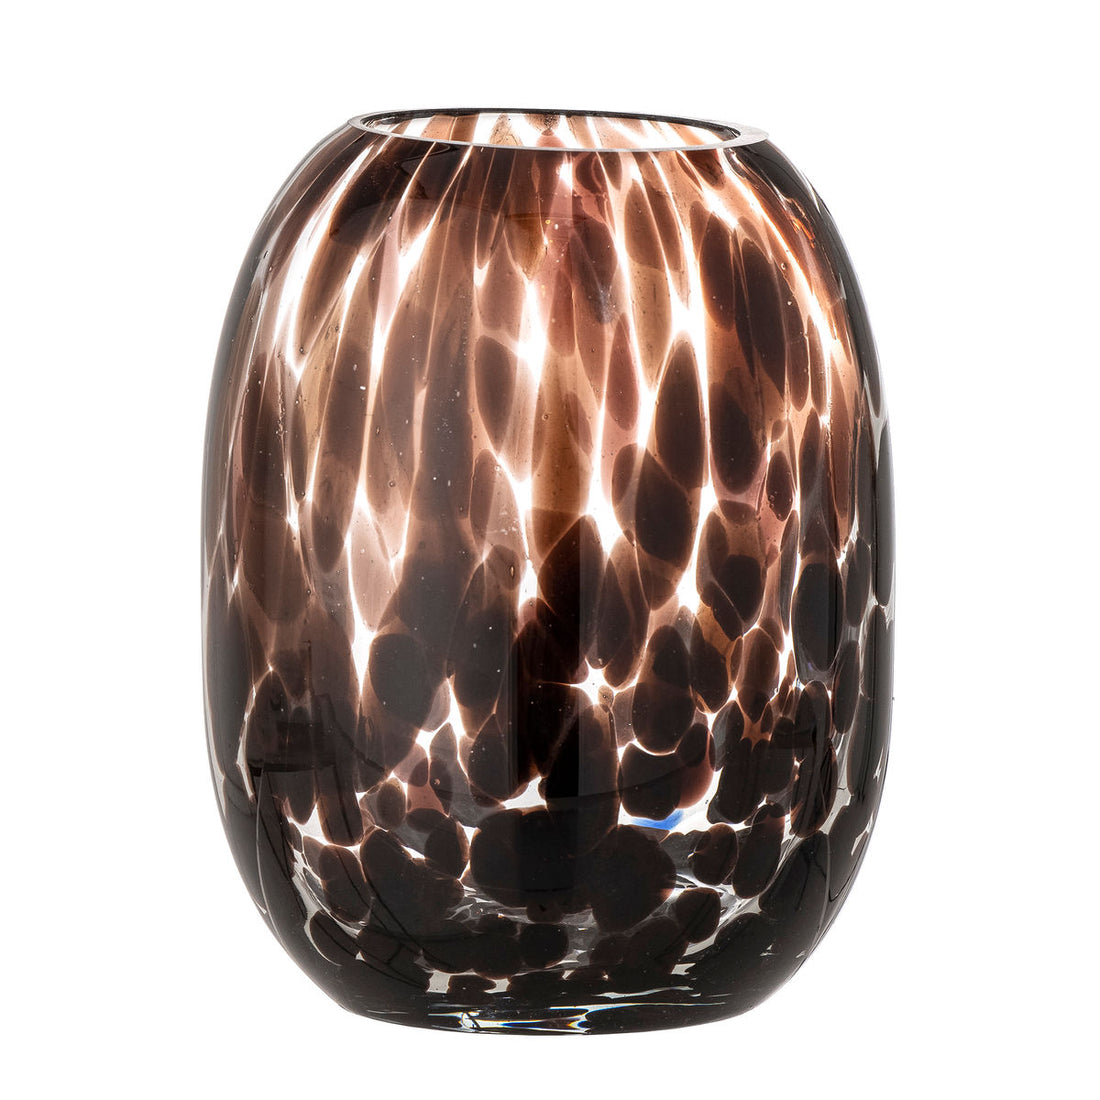 Bloomingville Crist vase, brown, glass